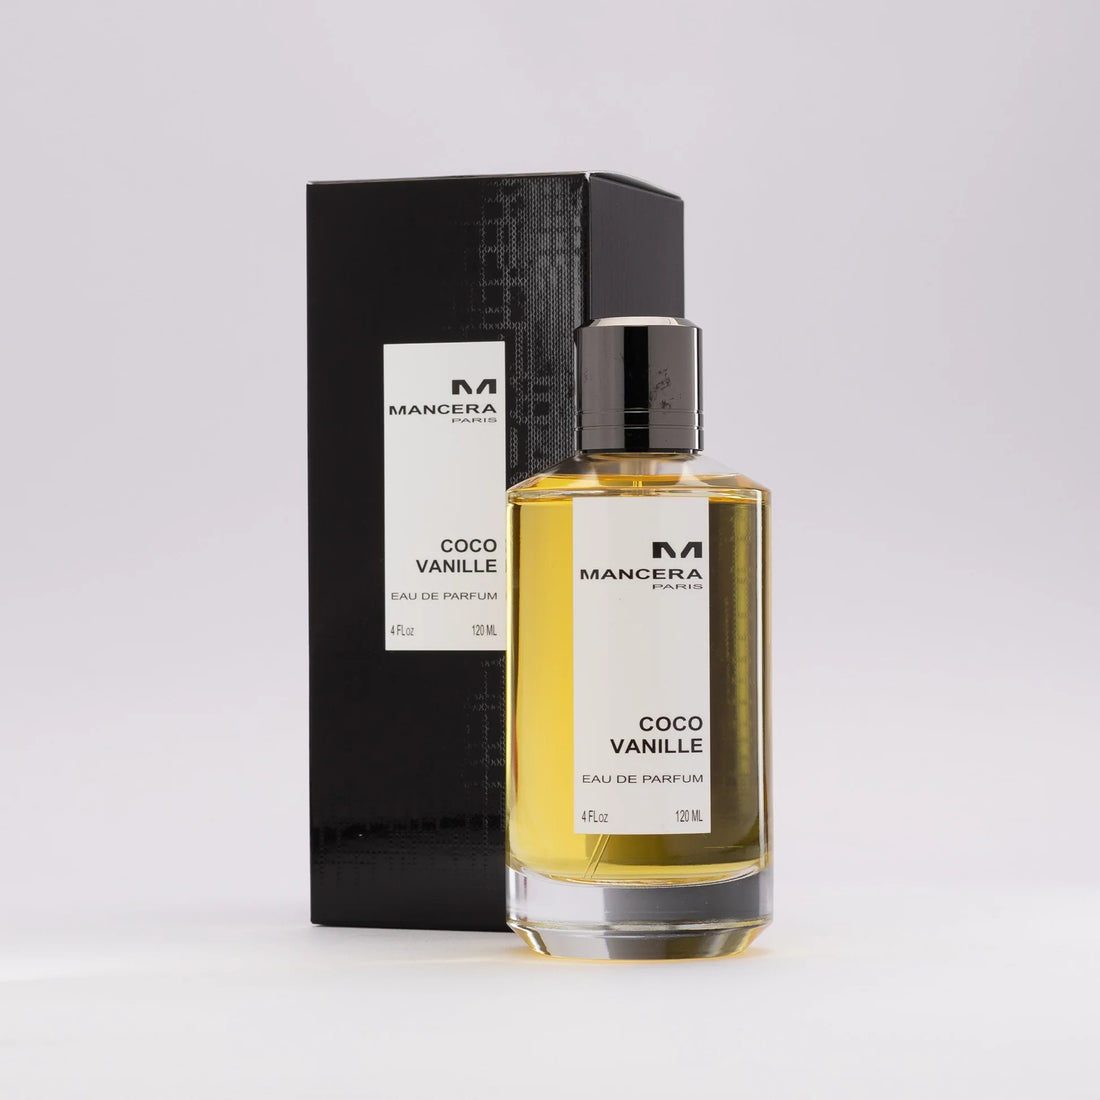 Mancera's Vanilla Coconut Perfume Unveiled